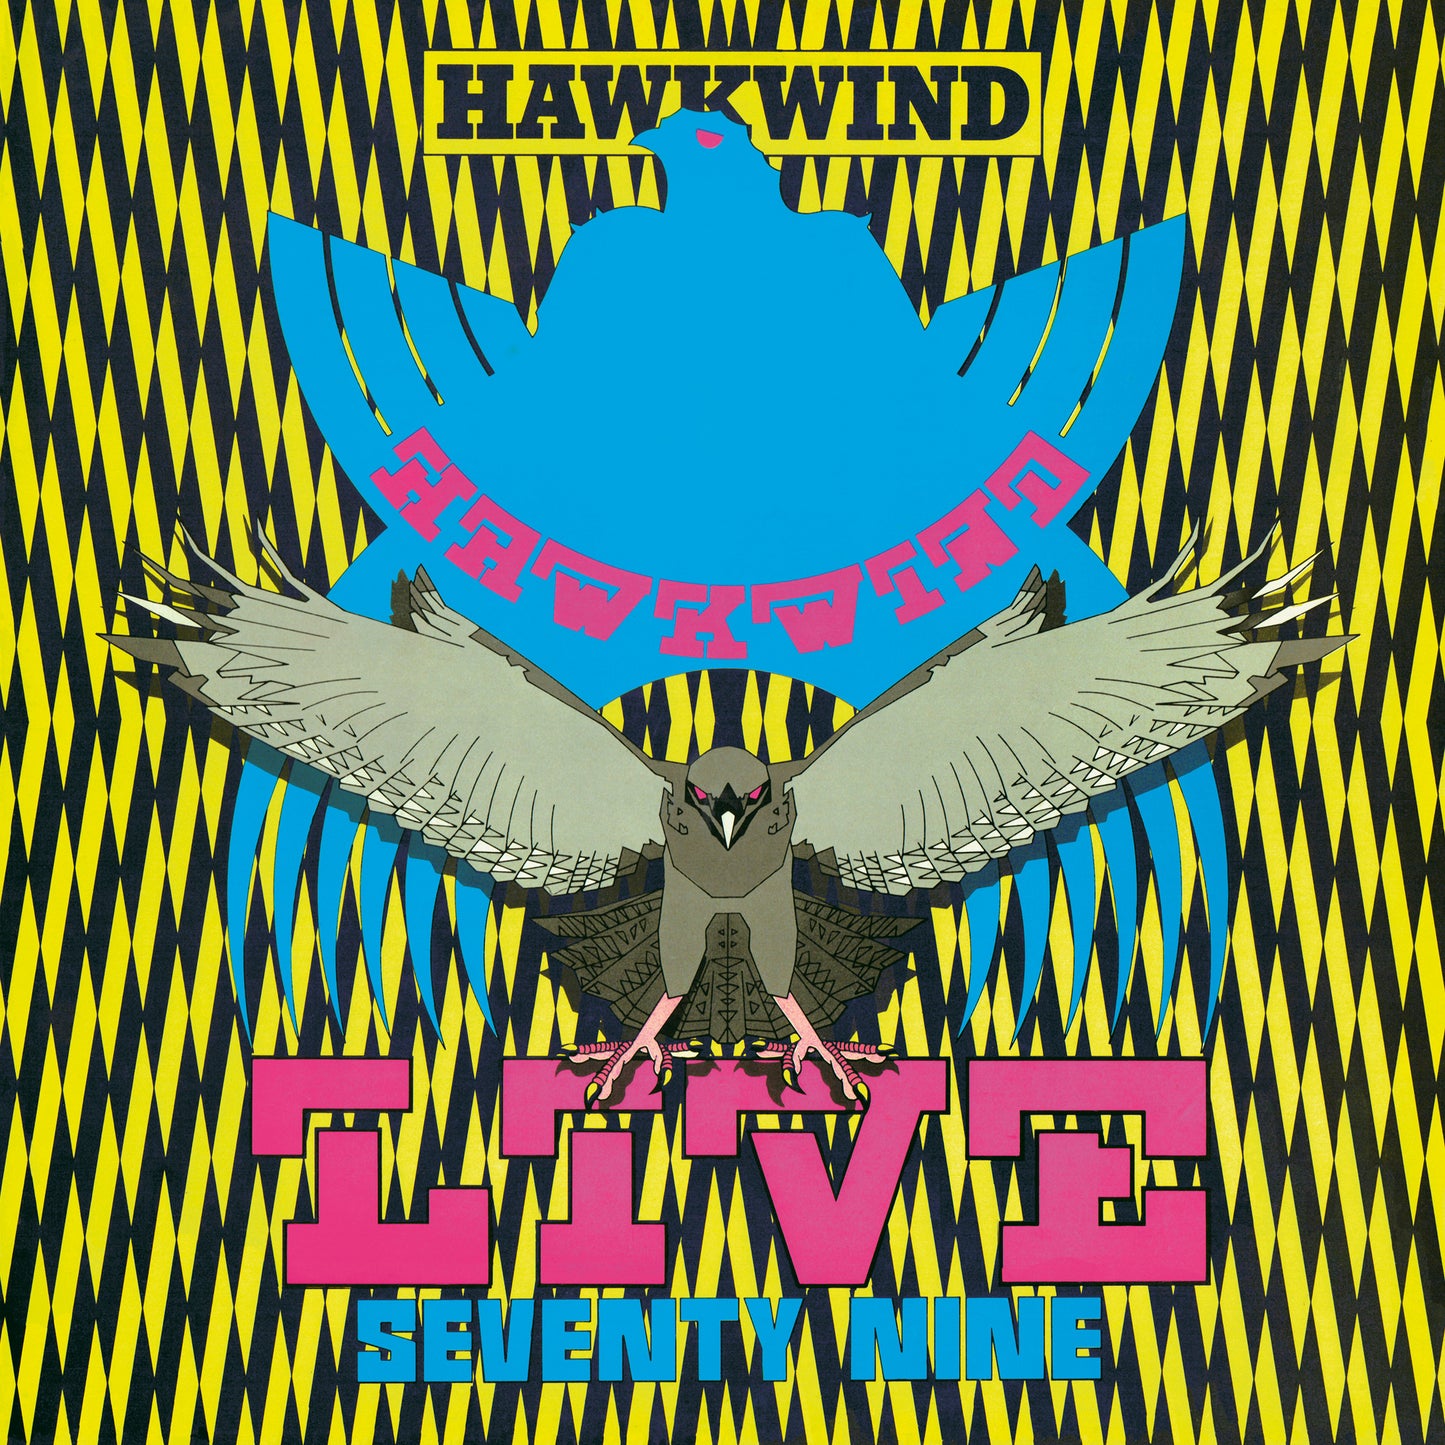 Hawkwind Live Seventy-Nine RSD